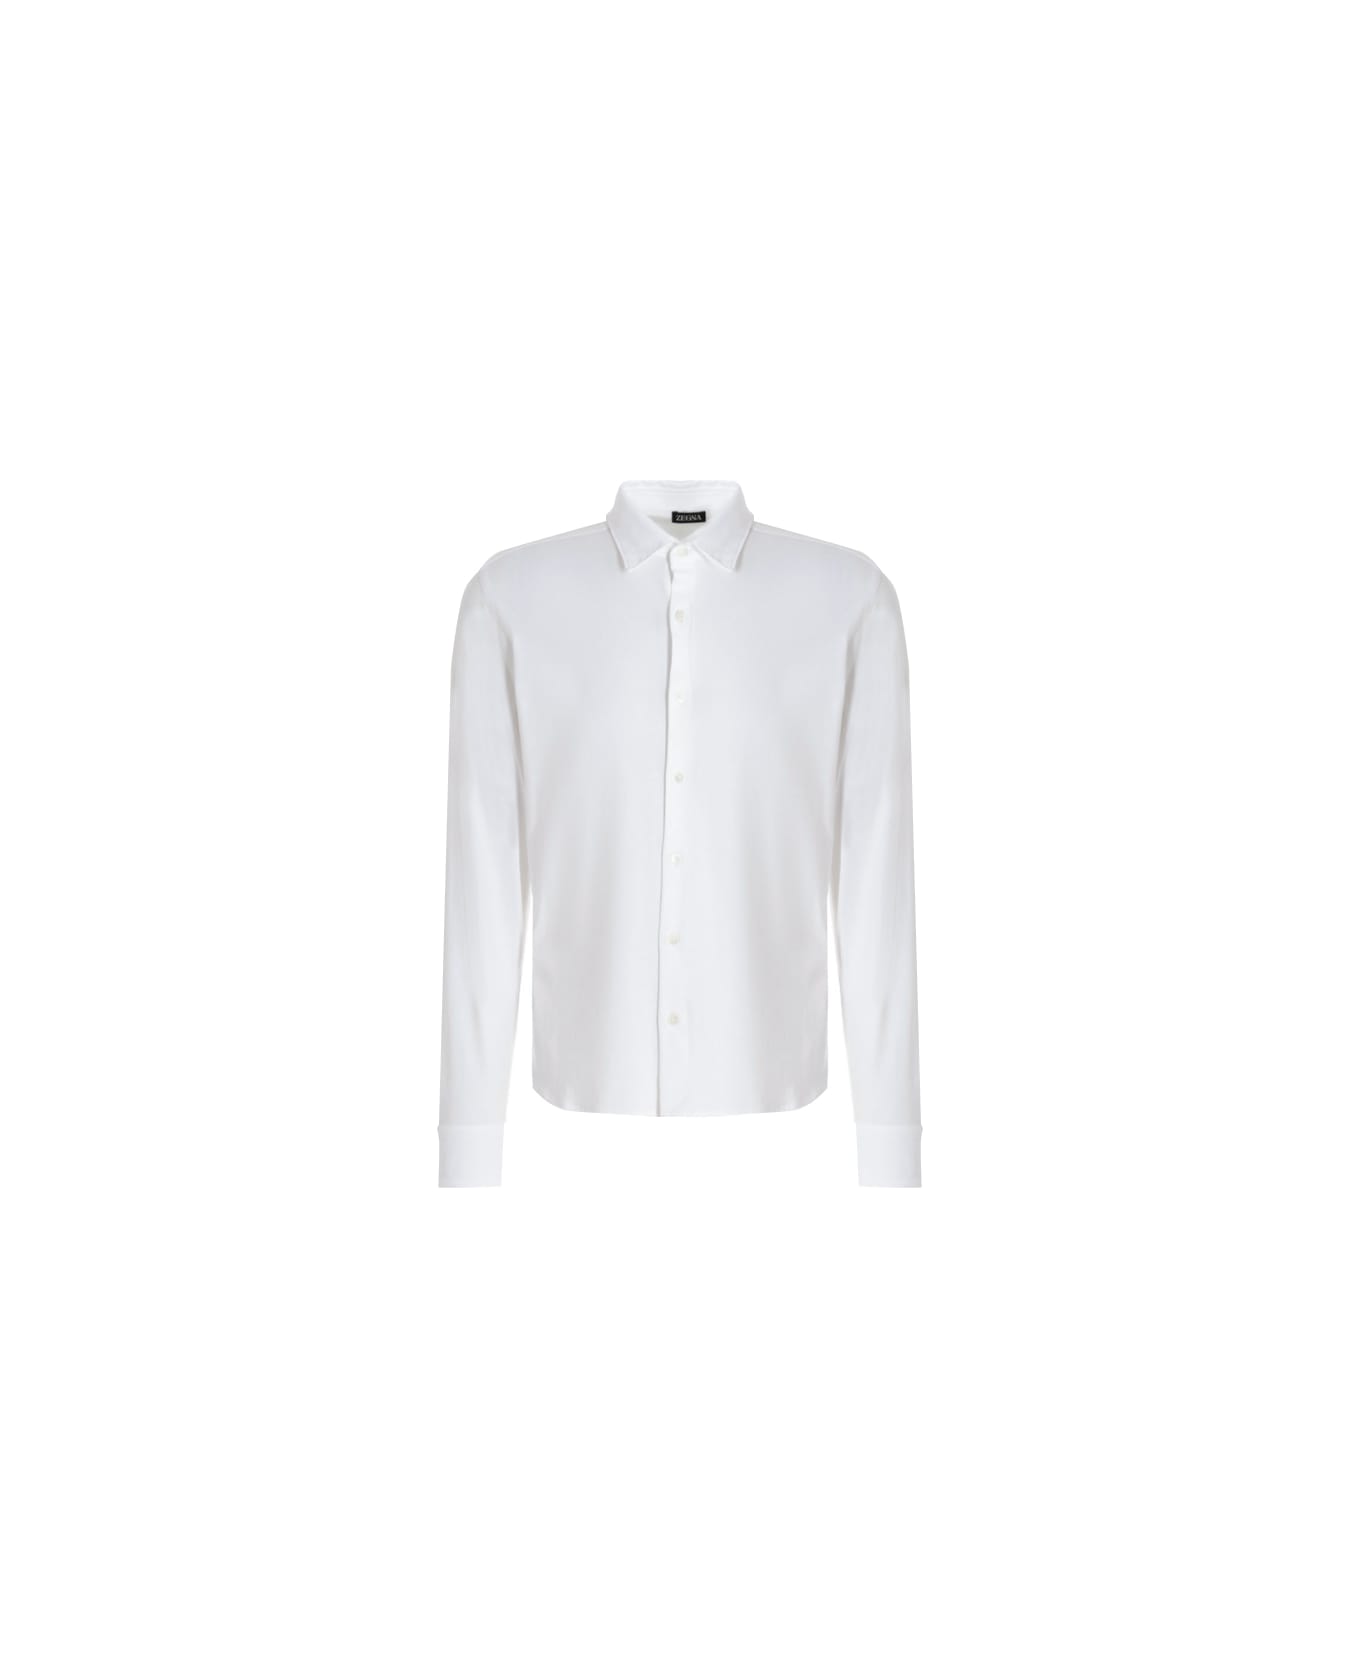 Zegna Cotton Jersey Shirt - White